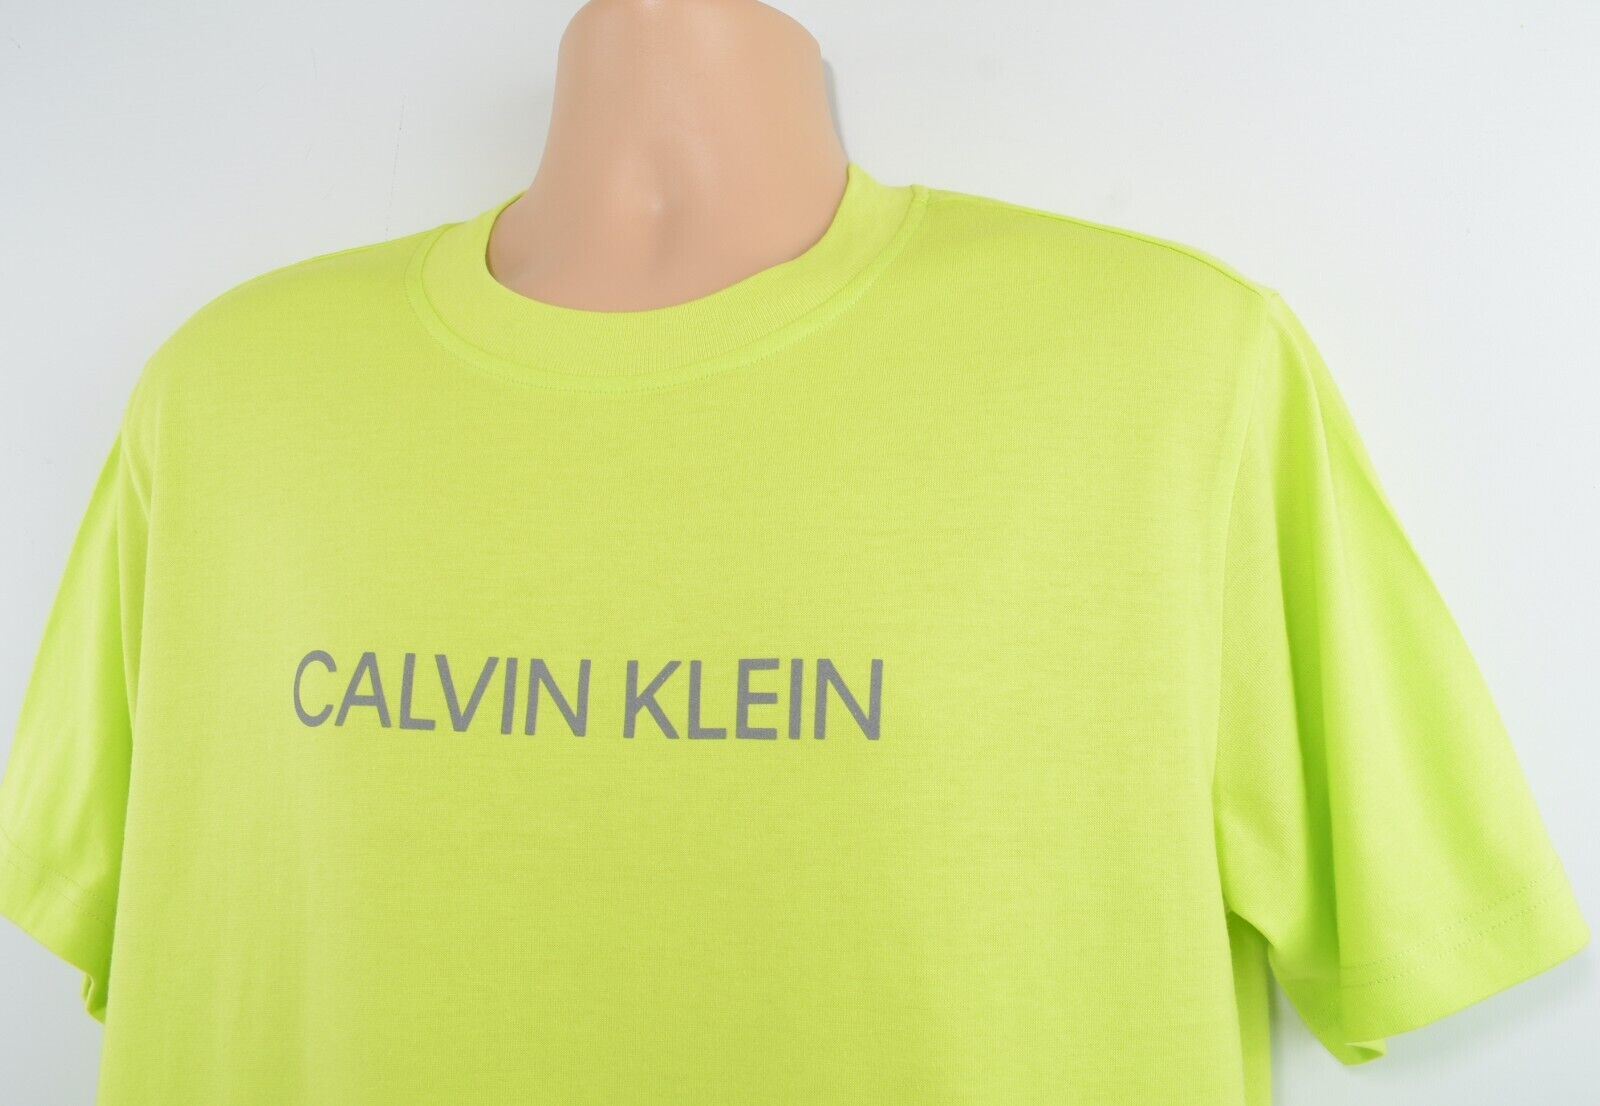 CALVIN KLEIN Performance: Men's Crew Neck T-shirt, Acid Lime, size MEDIUM